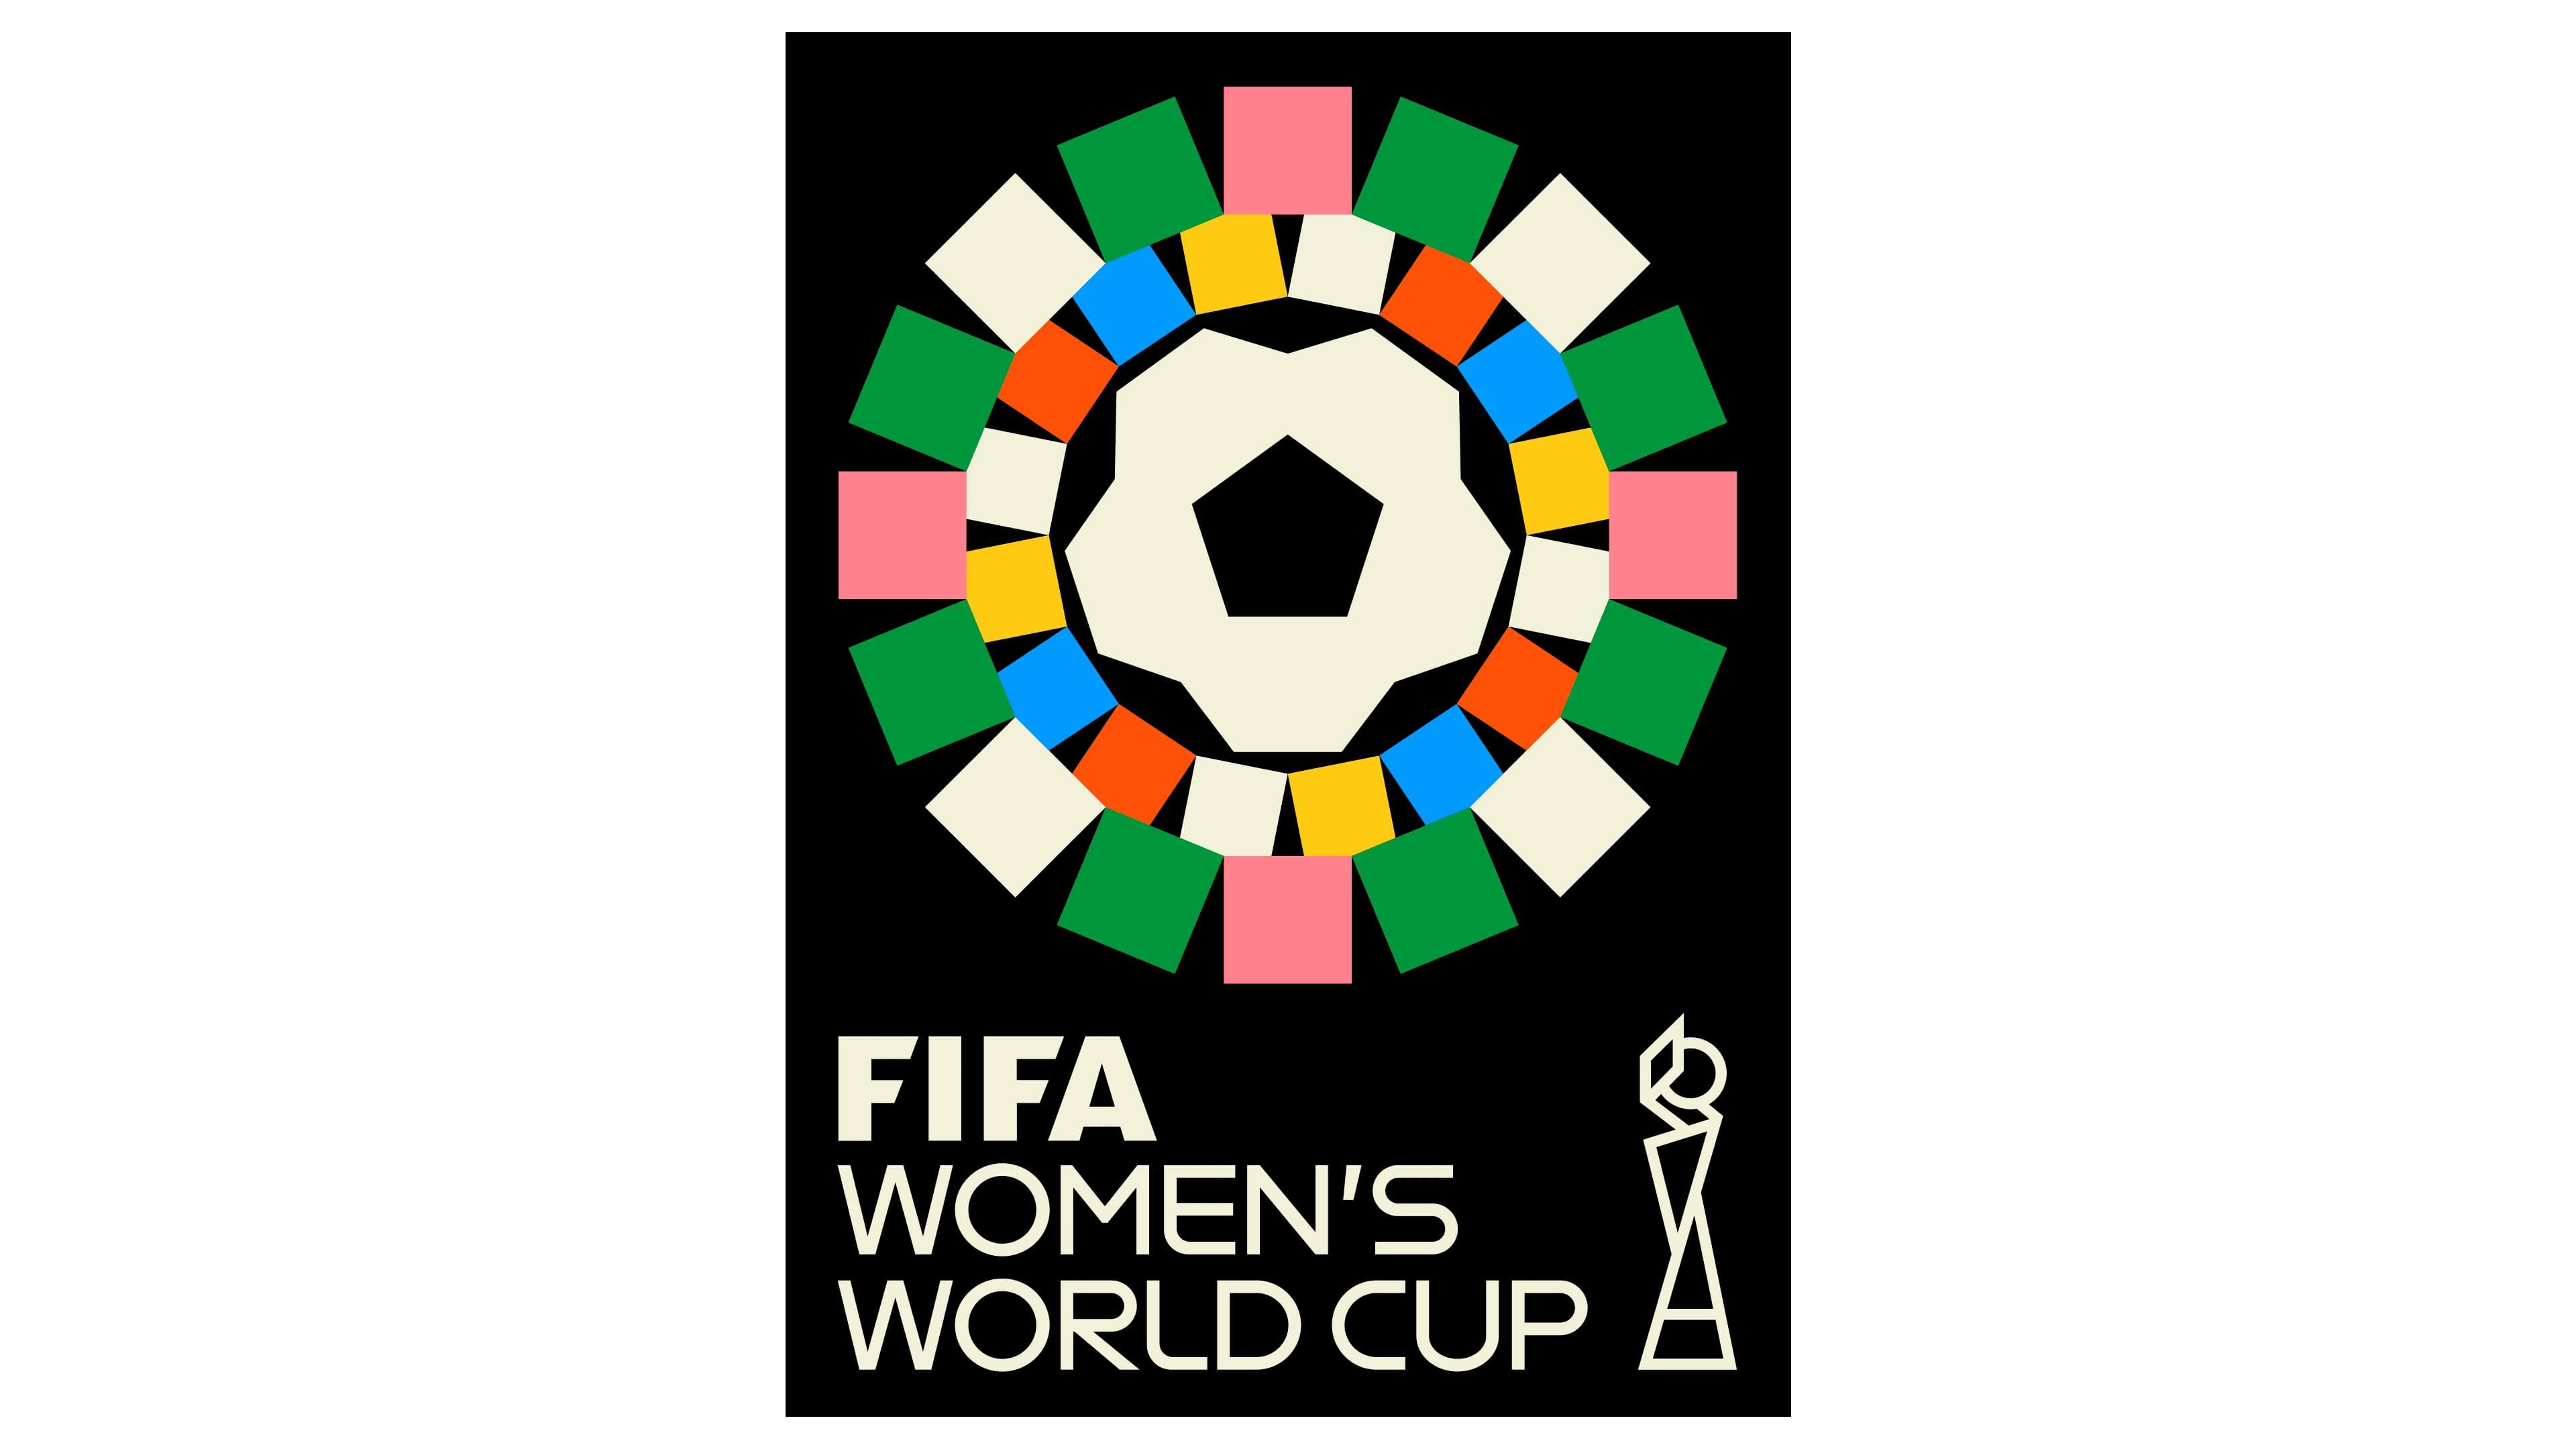 Análisis del logo oficial de la próxima Copa Mundial femenina de la FIFA